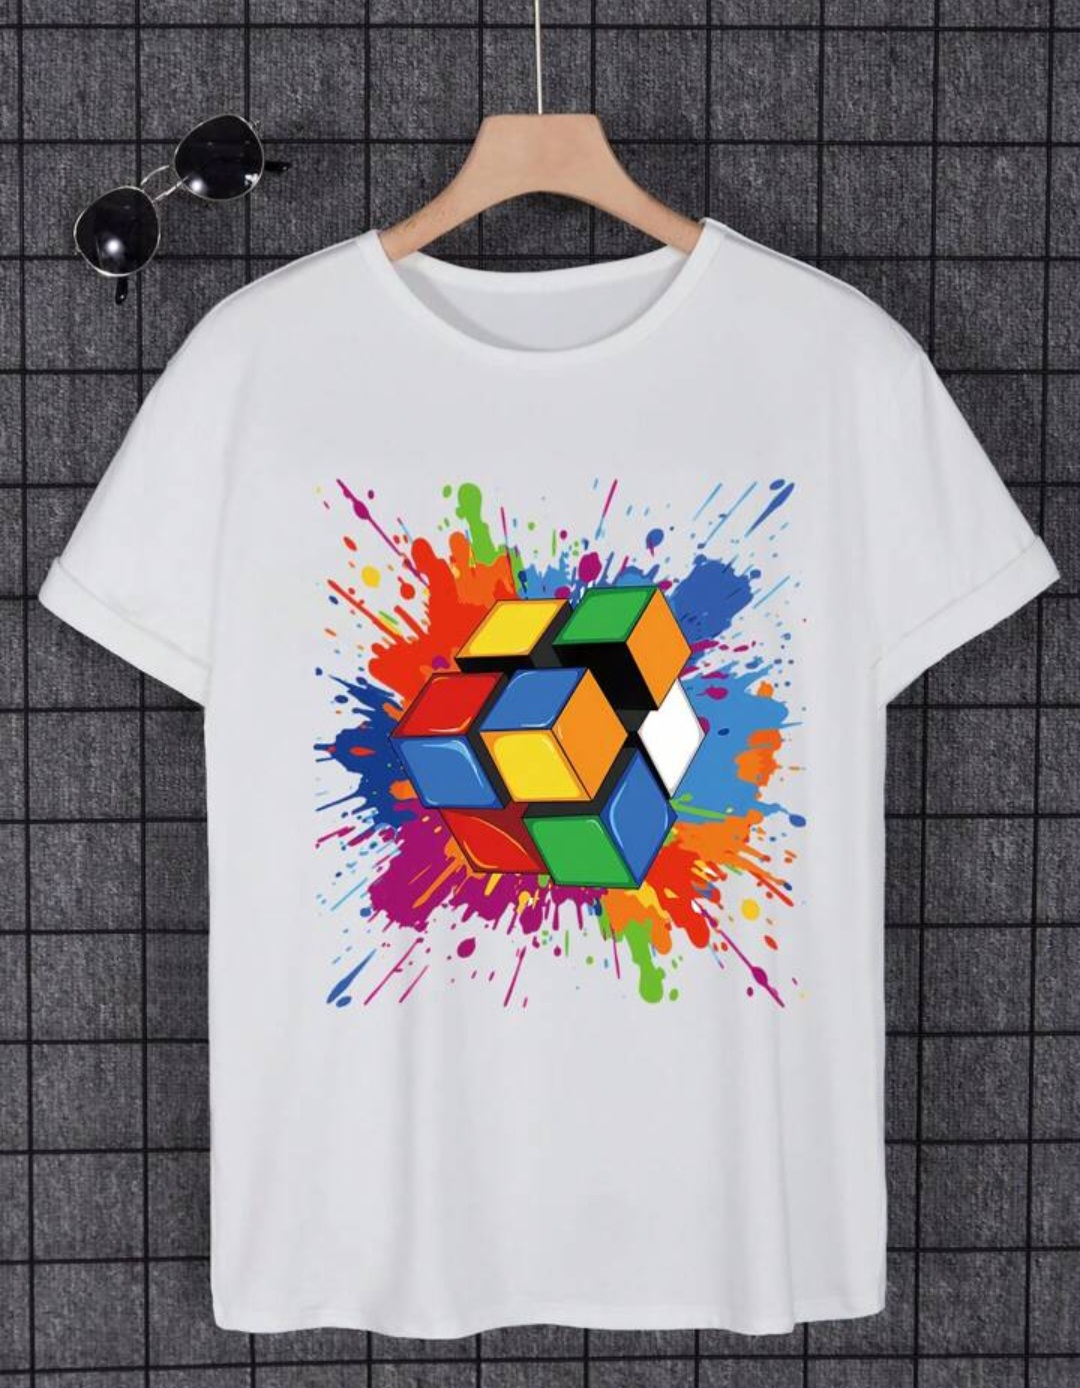 Teen Boys' Casual Fashionable Print T-Shirt